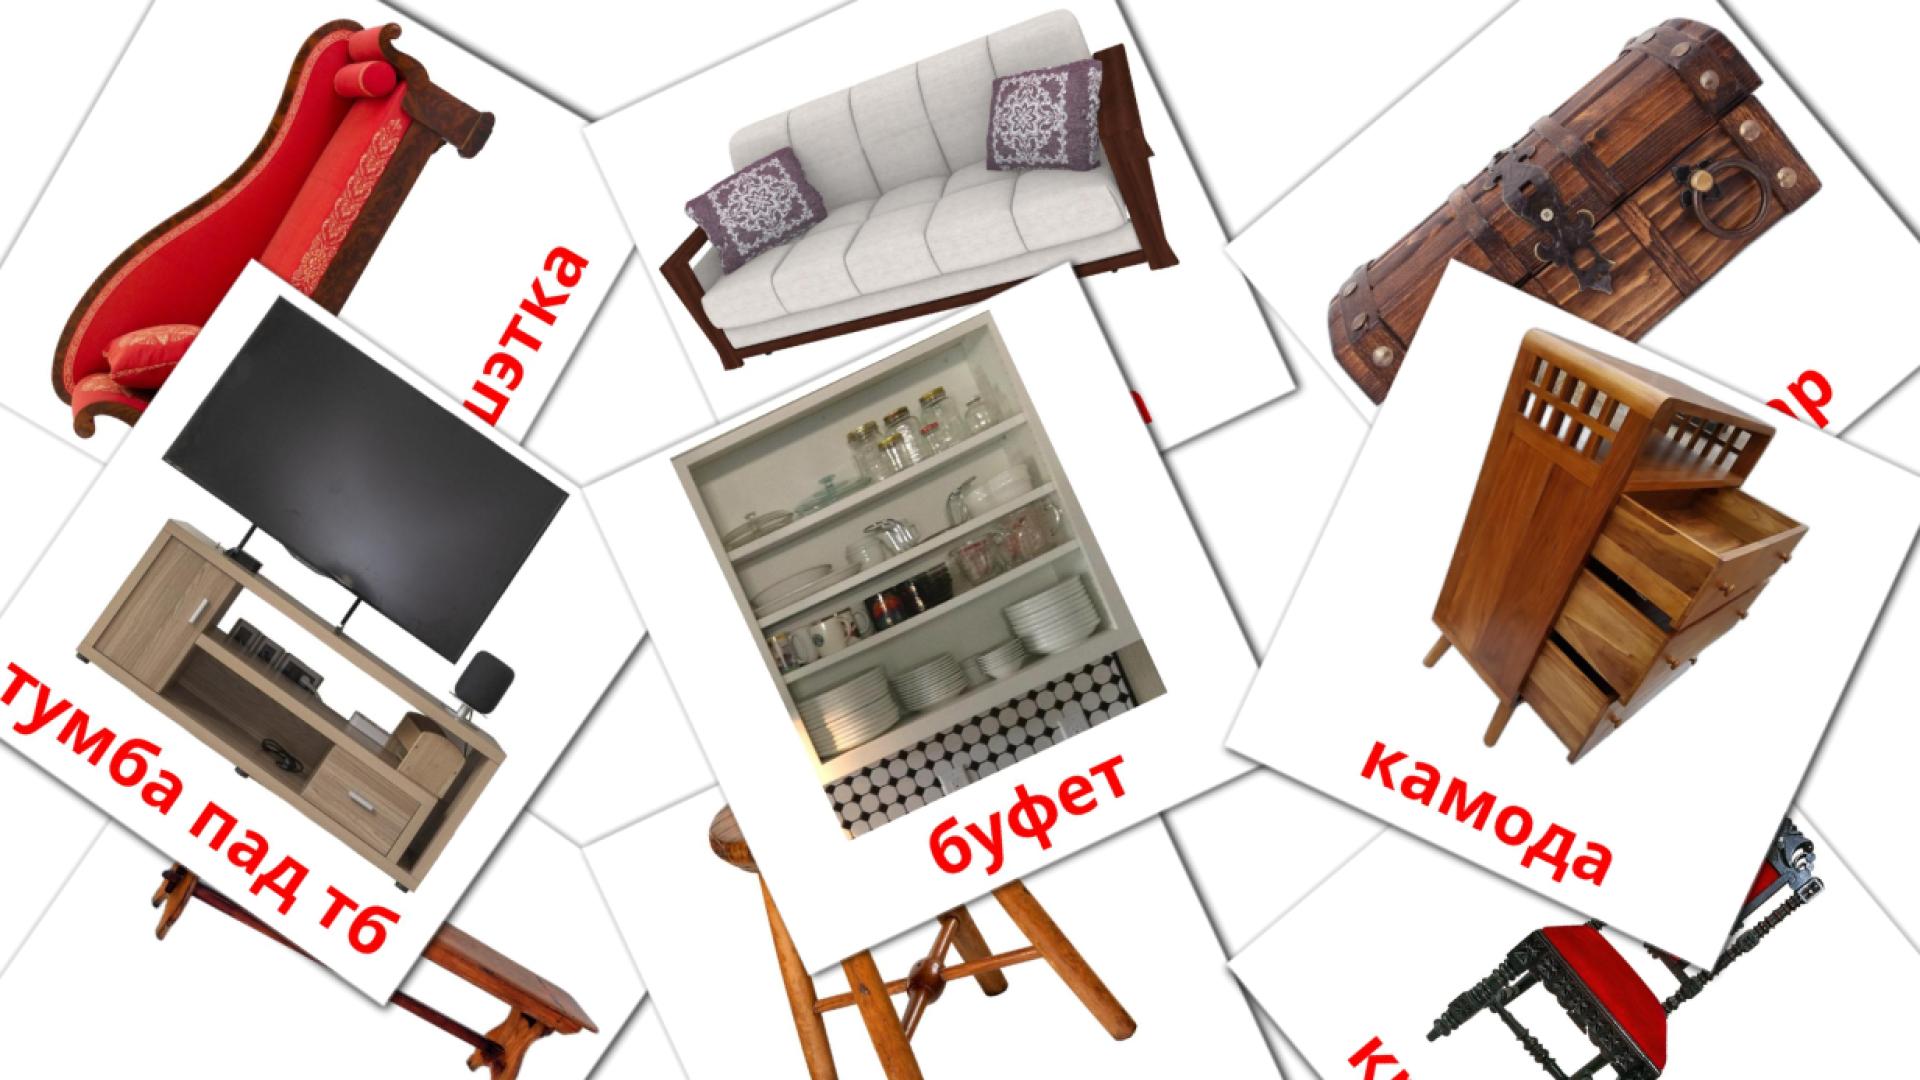 Furniture - belarusian vocabulary cards